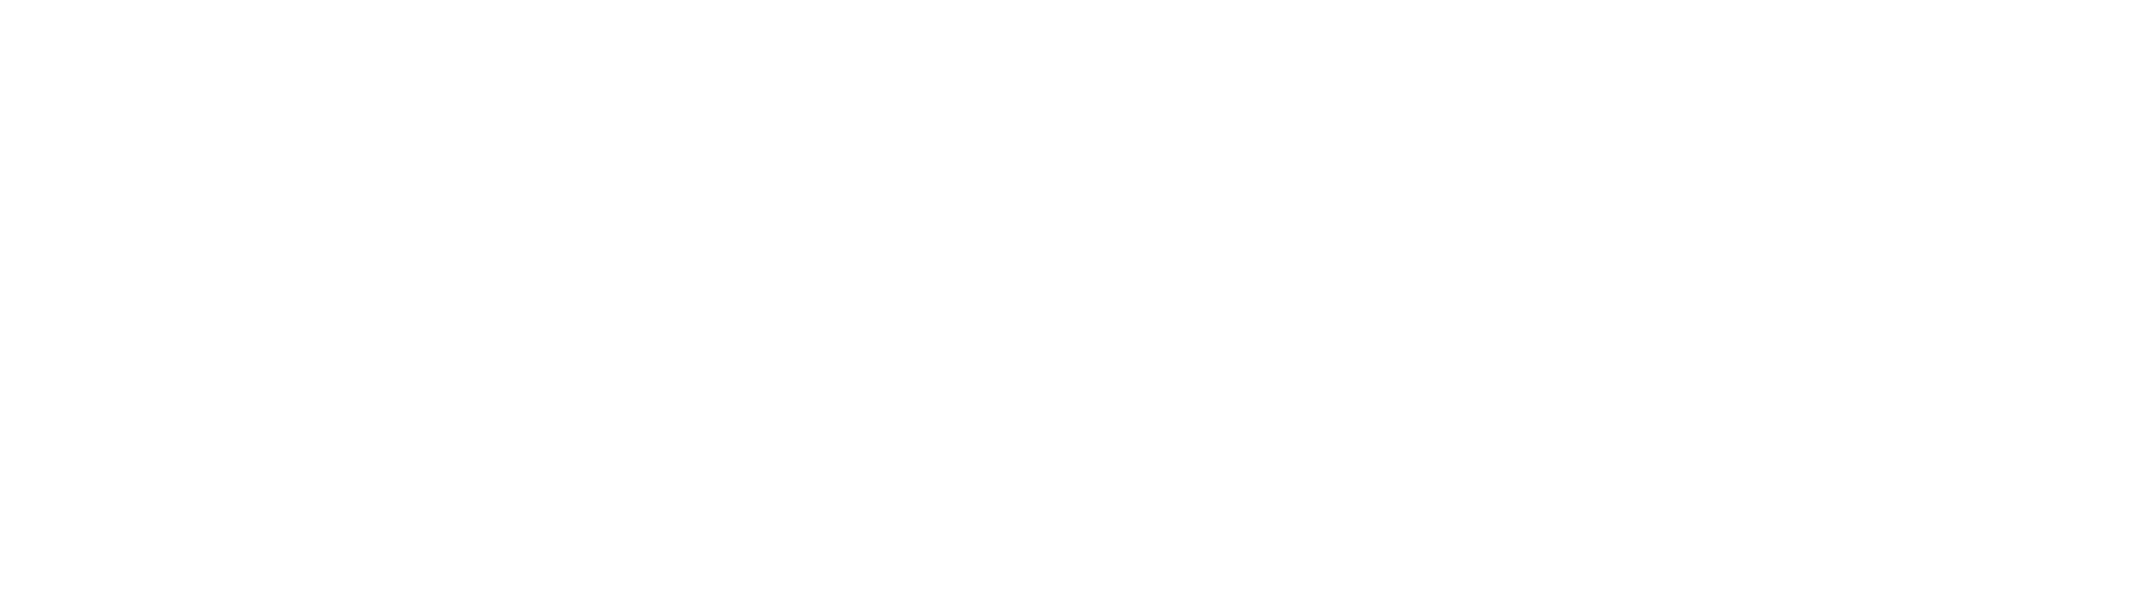 Oncore company logo - White color